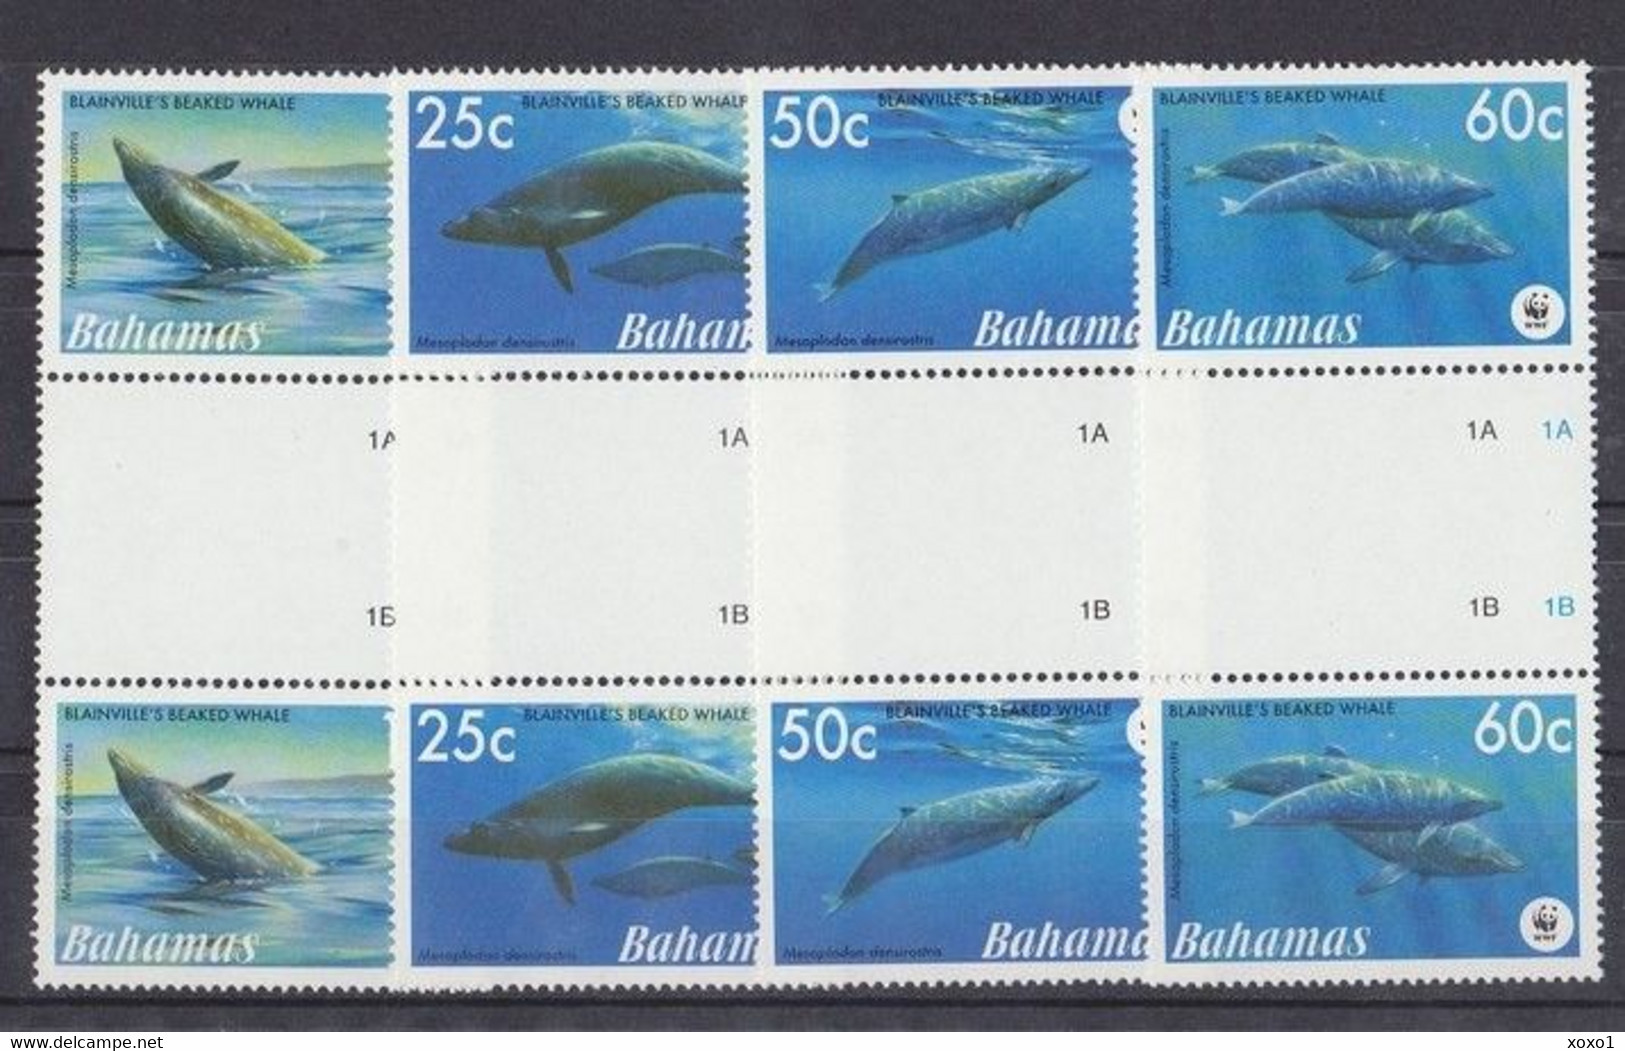 Bahamas 2007 MiNr. 1281 - 1284 WWF Marine Mammals Blainville's Beaked Whales Gutter Pair 8v MNH** 7.20 € - Unused Stamps